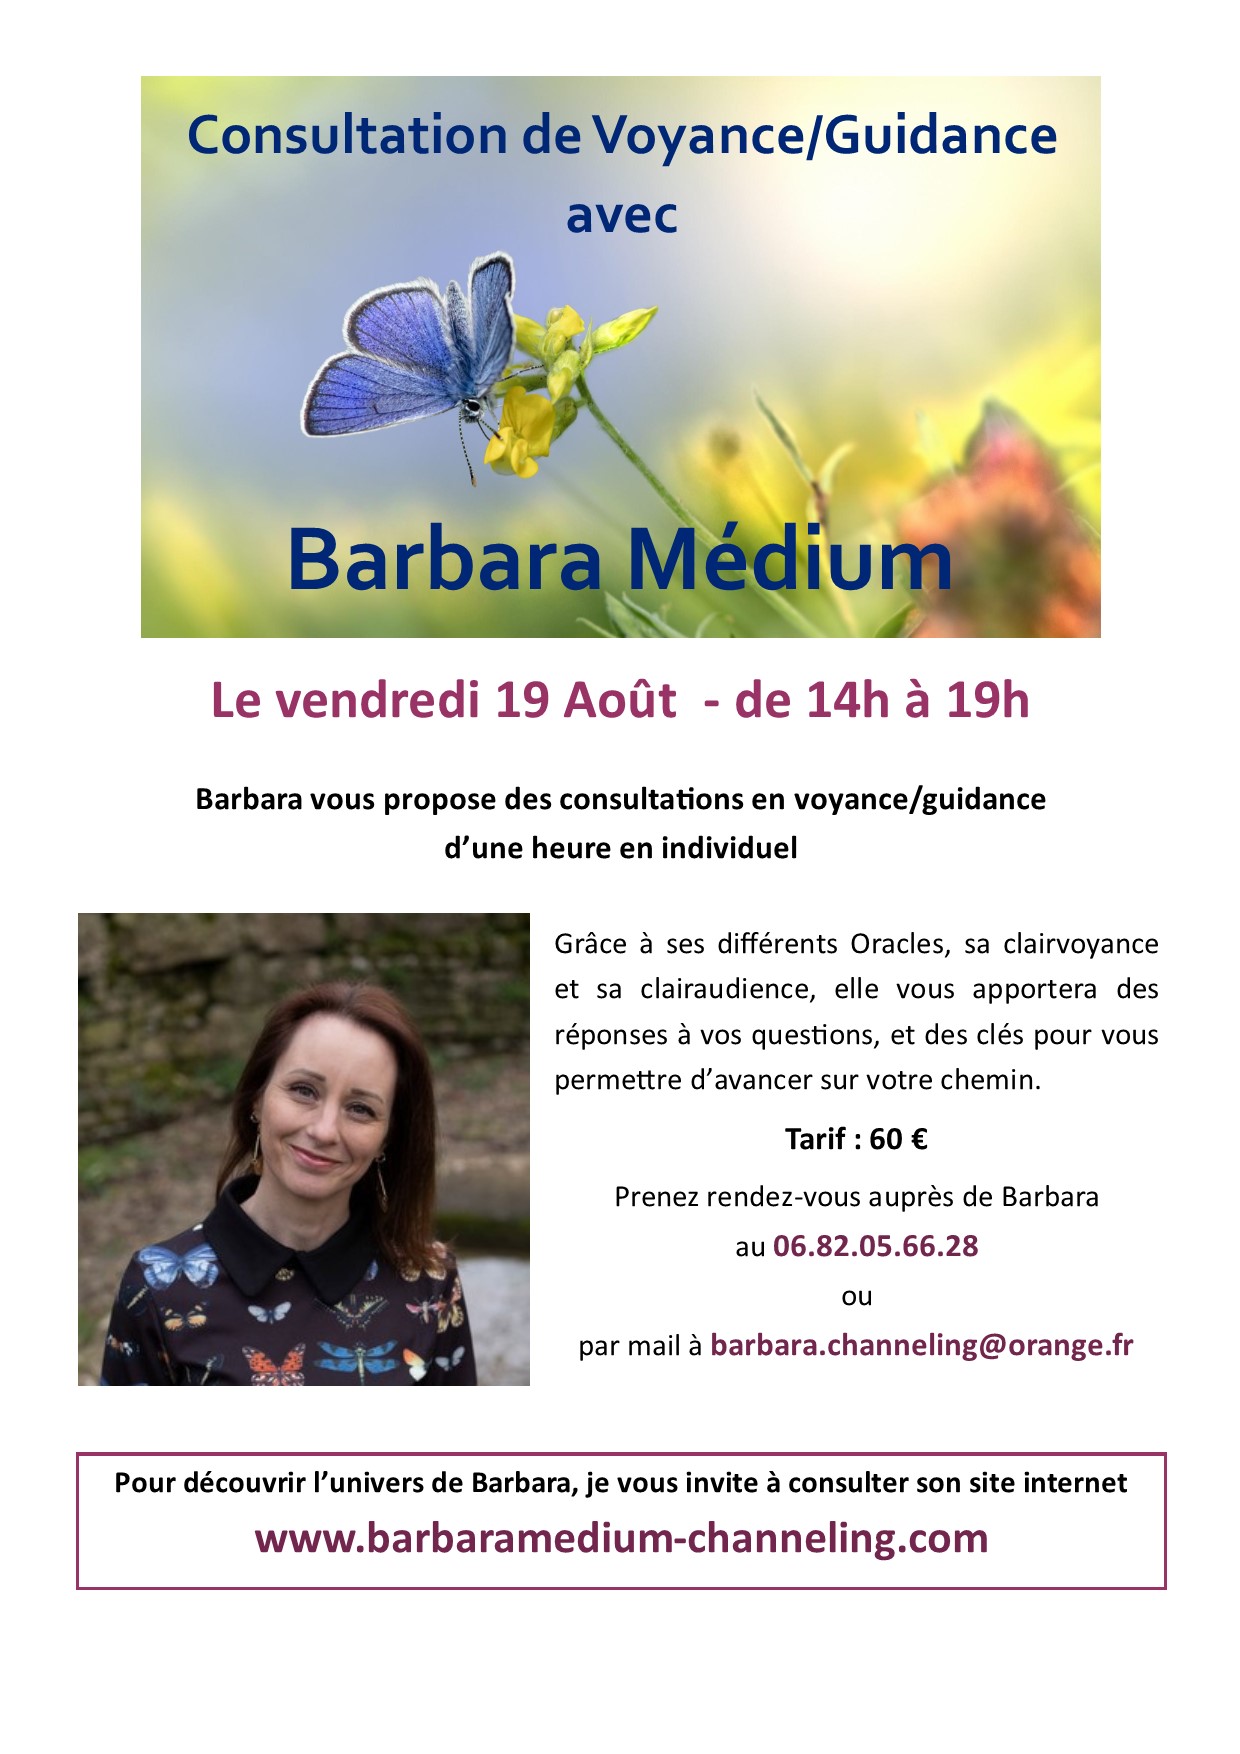 Consultation de Voyance/Guidance avec Barbara Médium